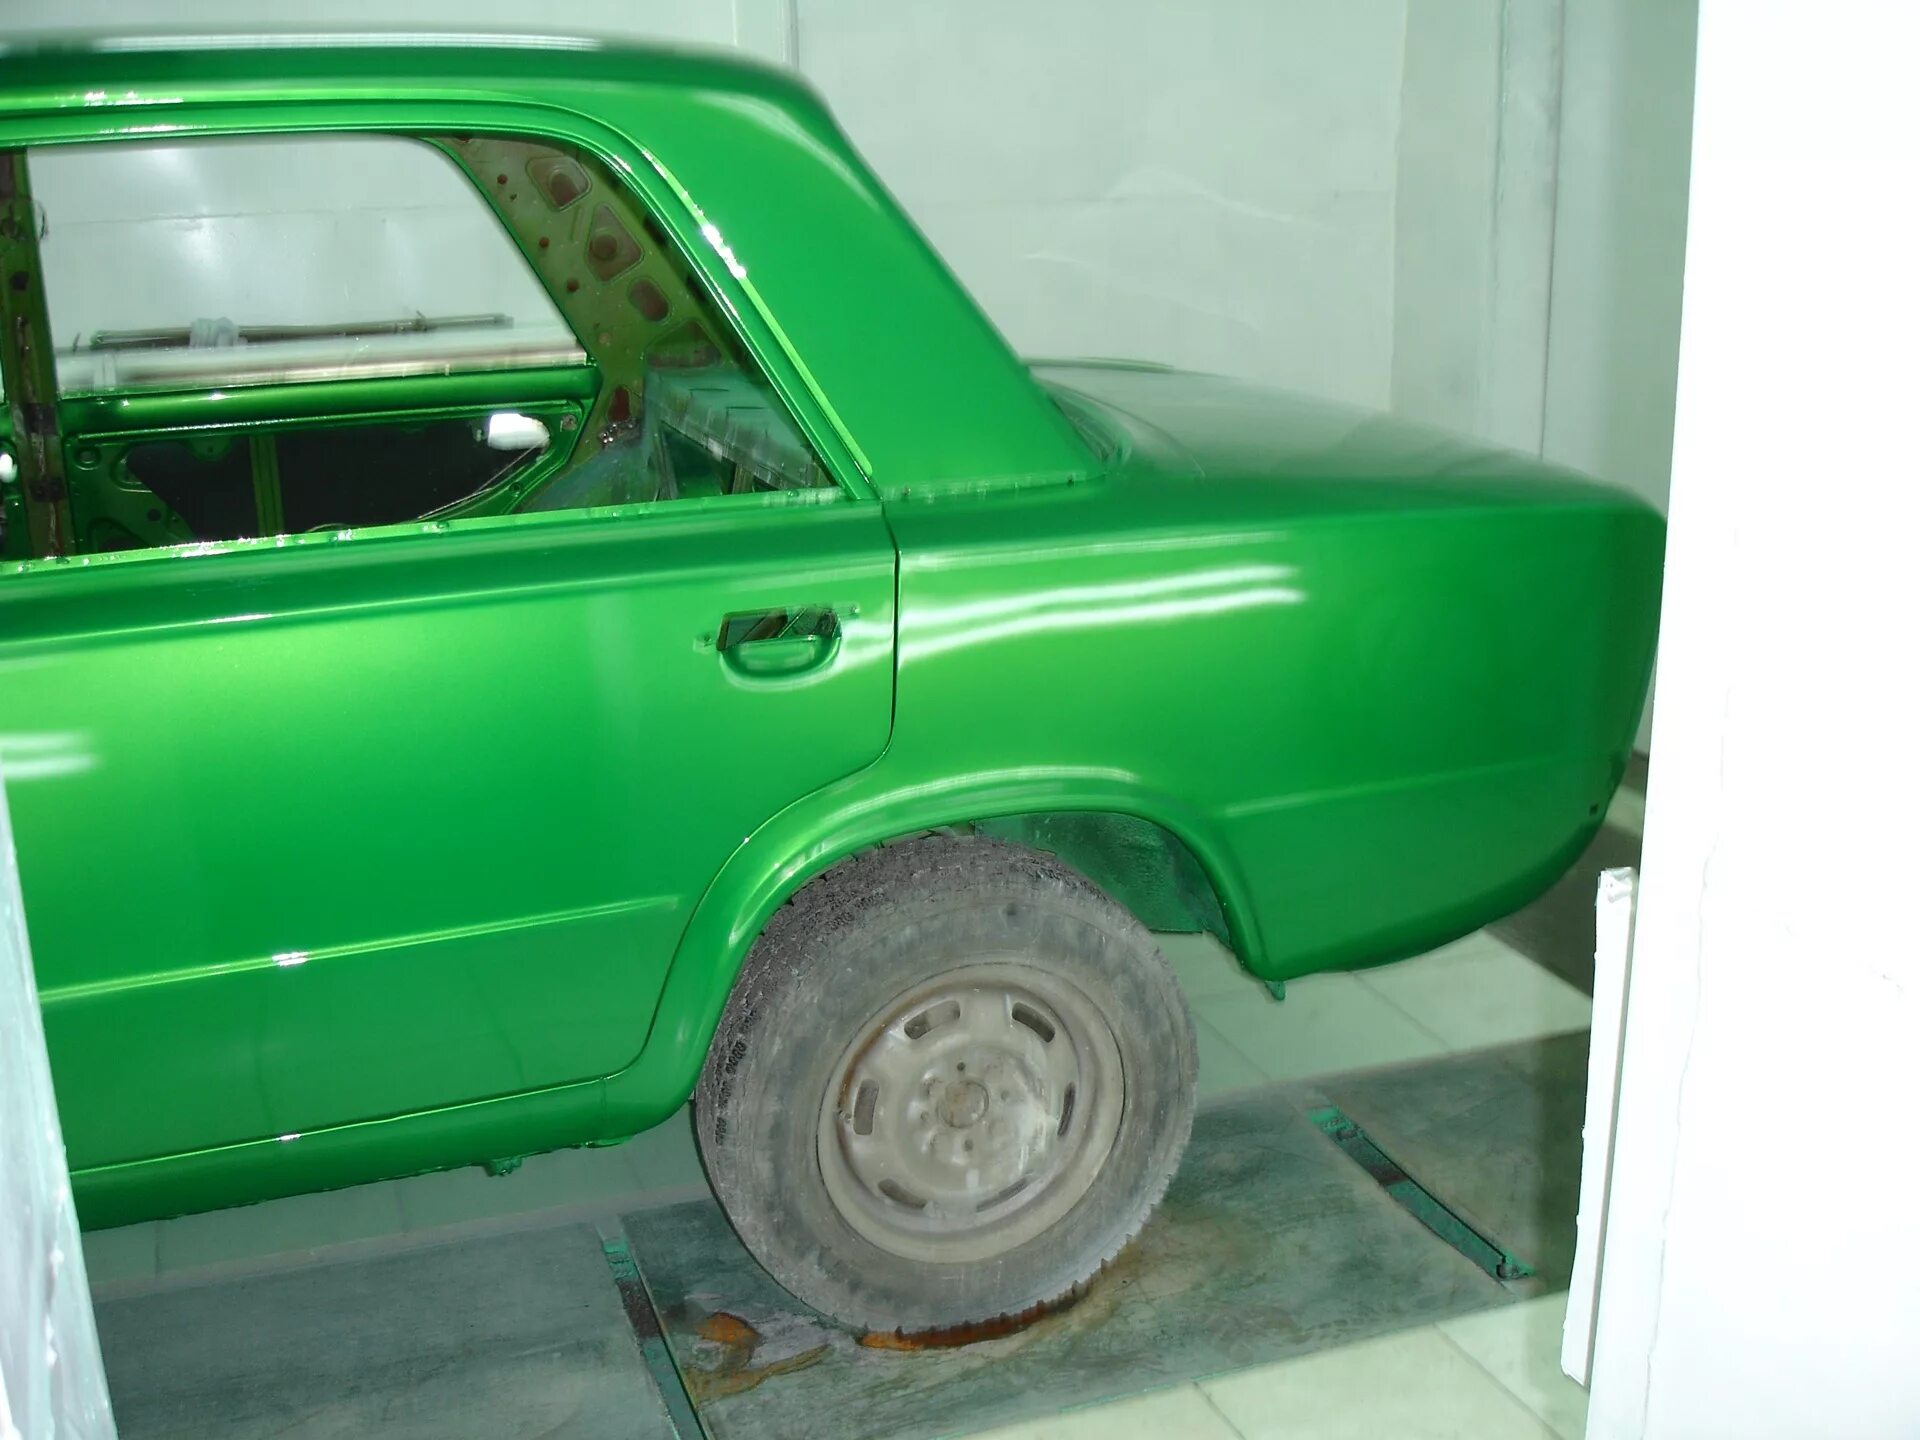 Предмет покрашен краской зеленого цвета. ВАЗ 2101 зеленый металлик. ВАЗ 2101 зеленый перламутр. ВАЗ 2101 Раптор. ВАЗ 2101 цвет зеленый металлик.